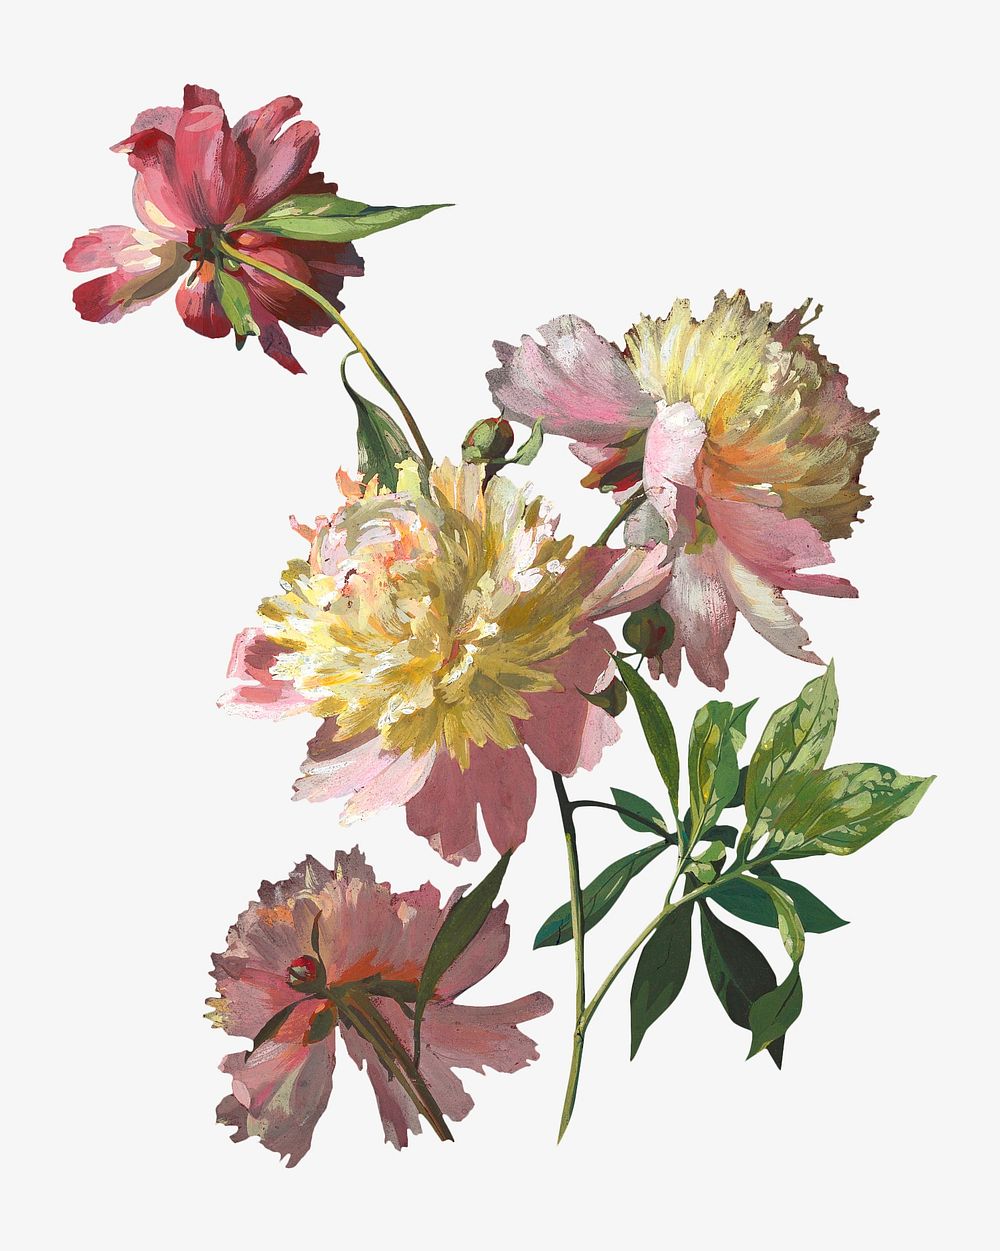 Peony flower, vintage botanical illustration. Remixed by rawpixel.